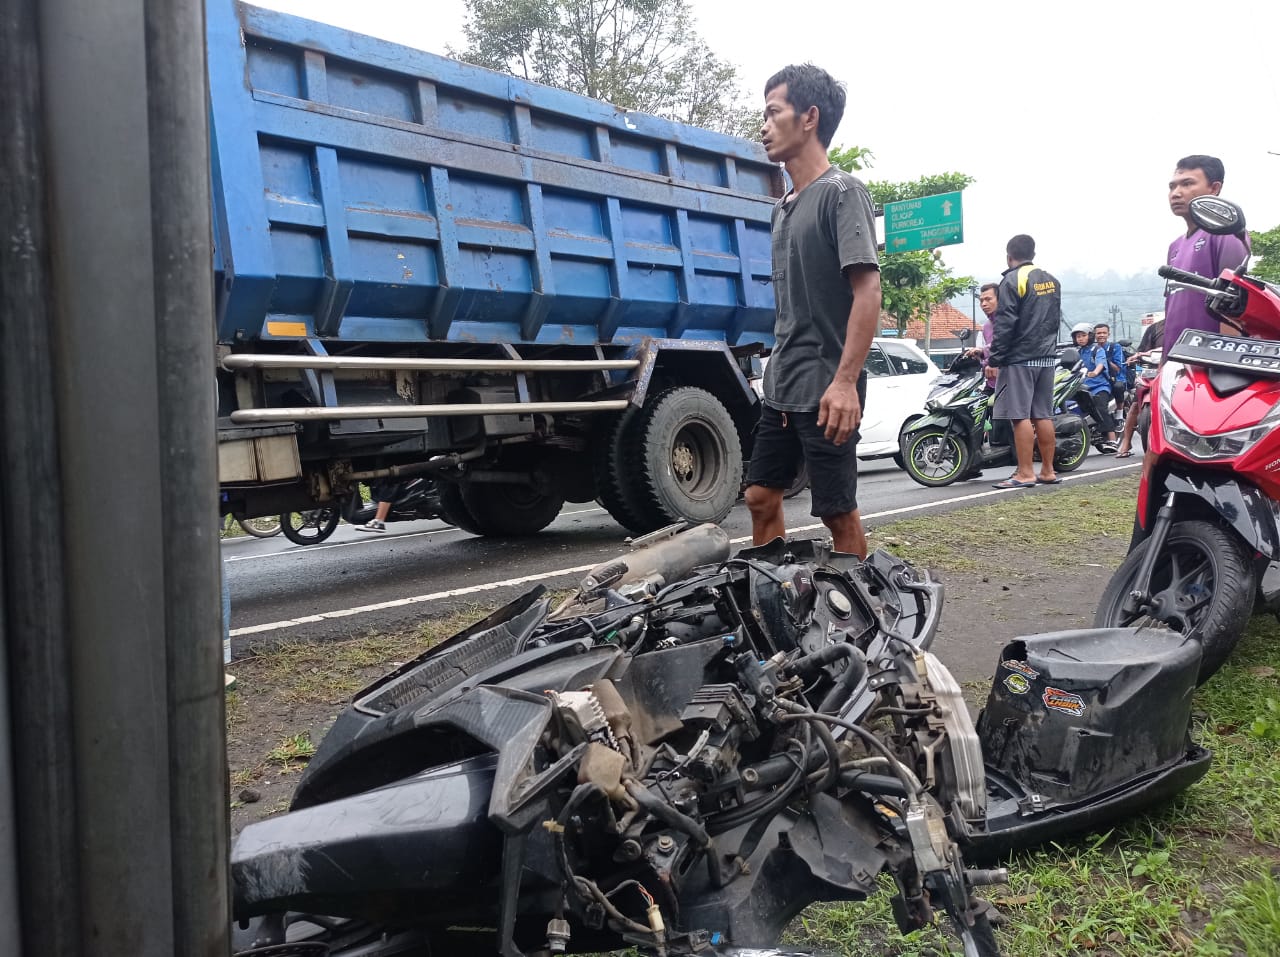 Tabrakan, Motor Hancur di Jalan Raya Somagede - Banyumas, Pelajar Selamat dari Kecelakaan